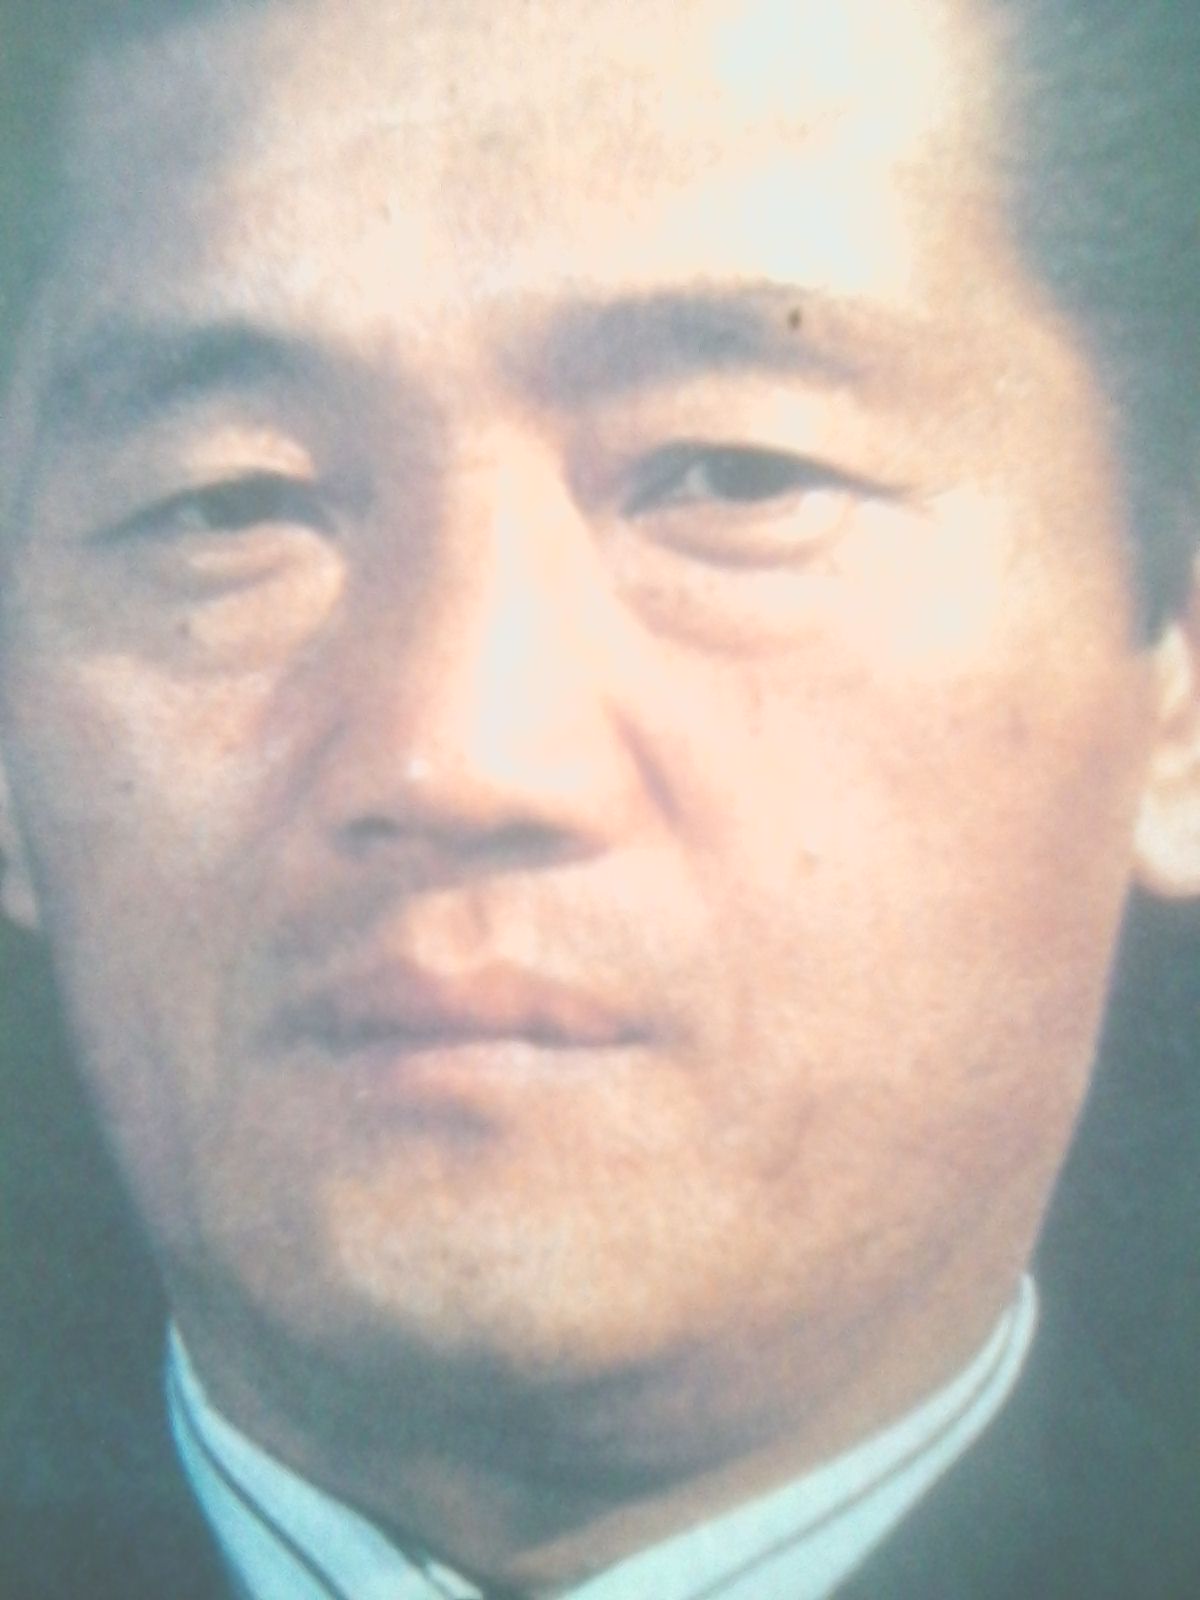 bos yakuza bernama hiroshi asaji  tabuhgong